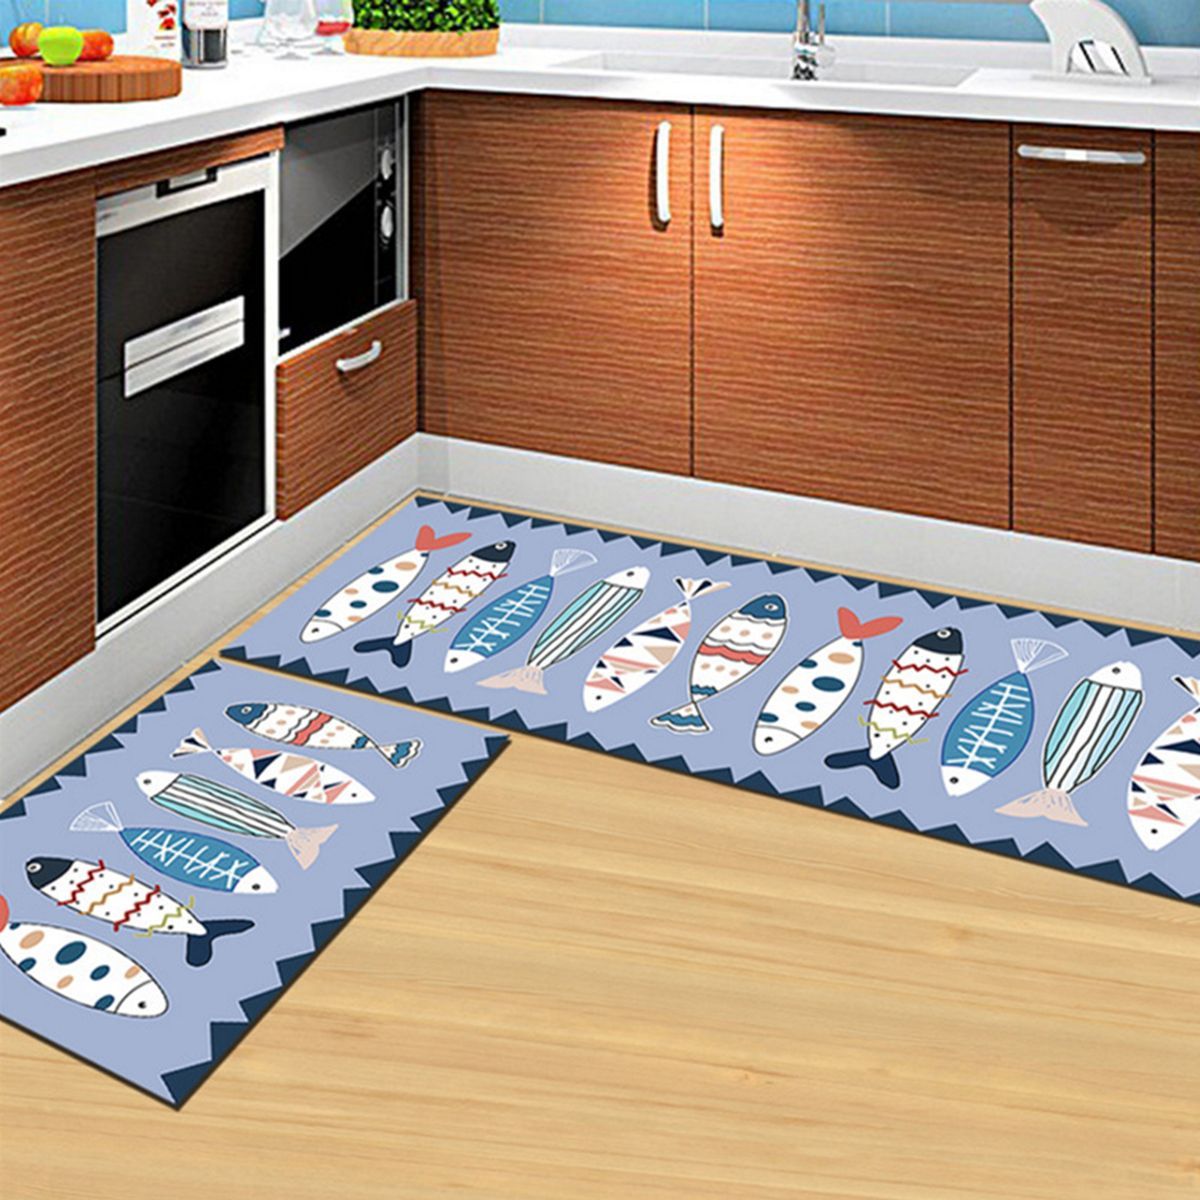 3-Sizes-Flannel-Cartoon-Anti-Skid-Area-Rug-Dining-Room-Home-Carpet-Floor-Mat-1452287